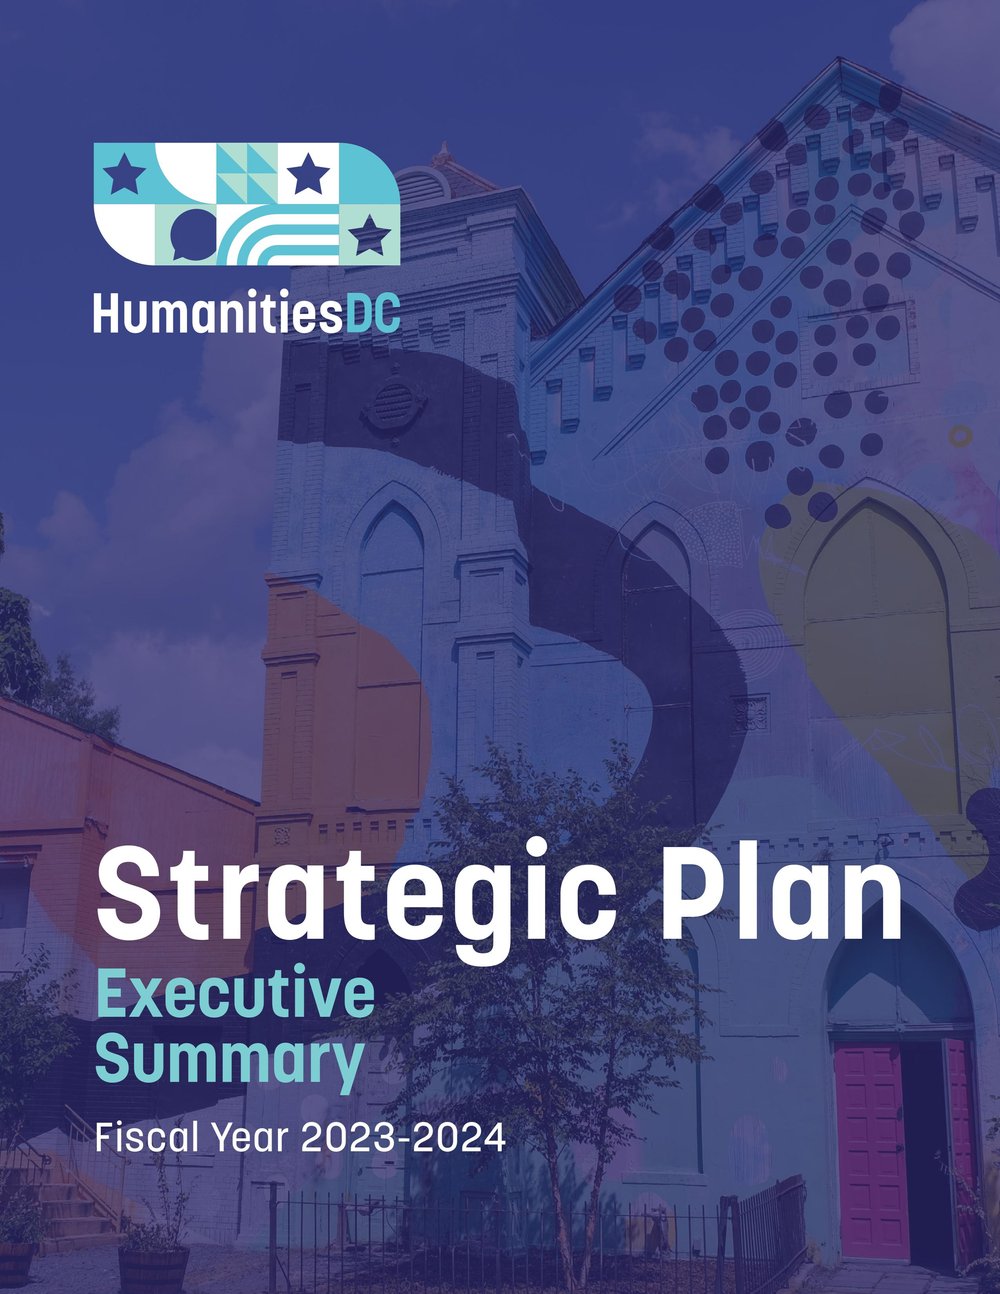 humanities-dc-strategic-plan-financial-statements-images-1.jpg